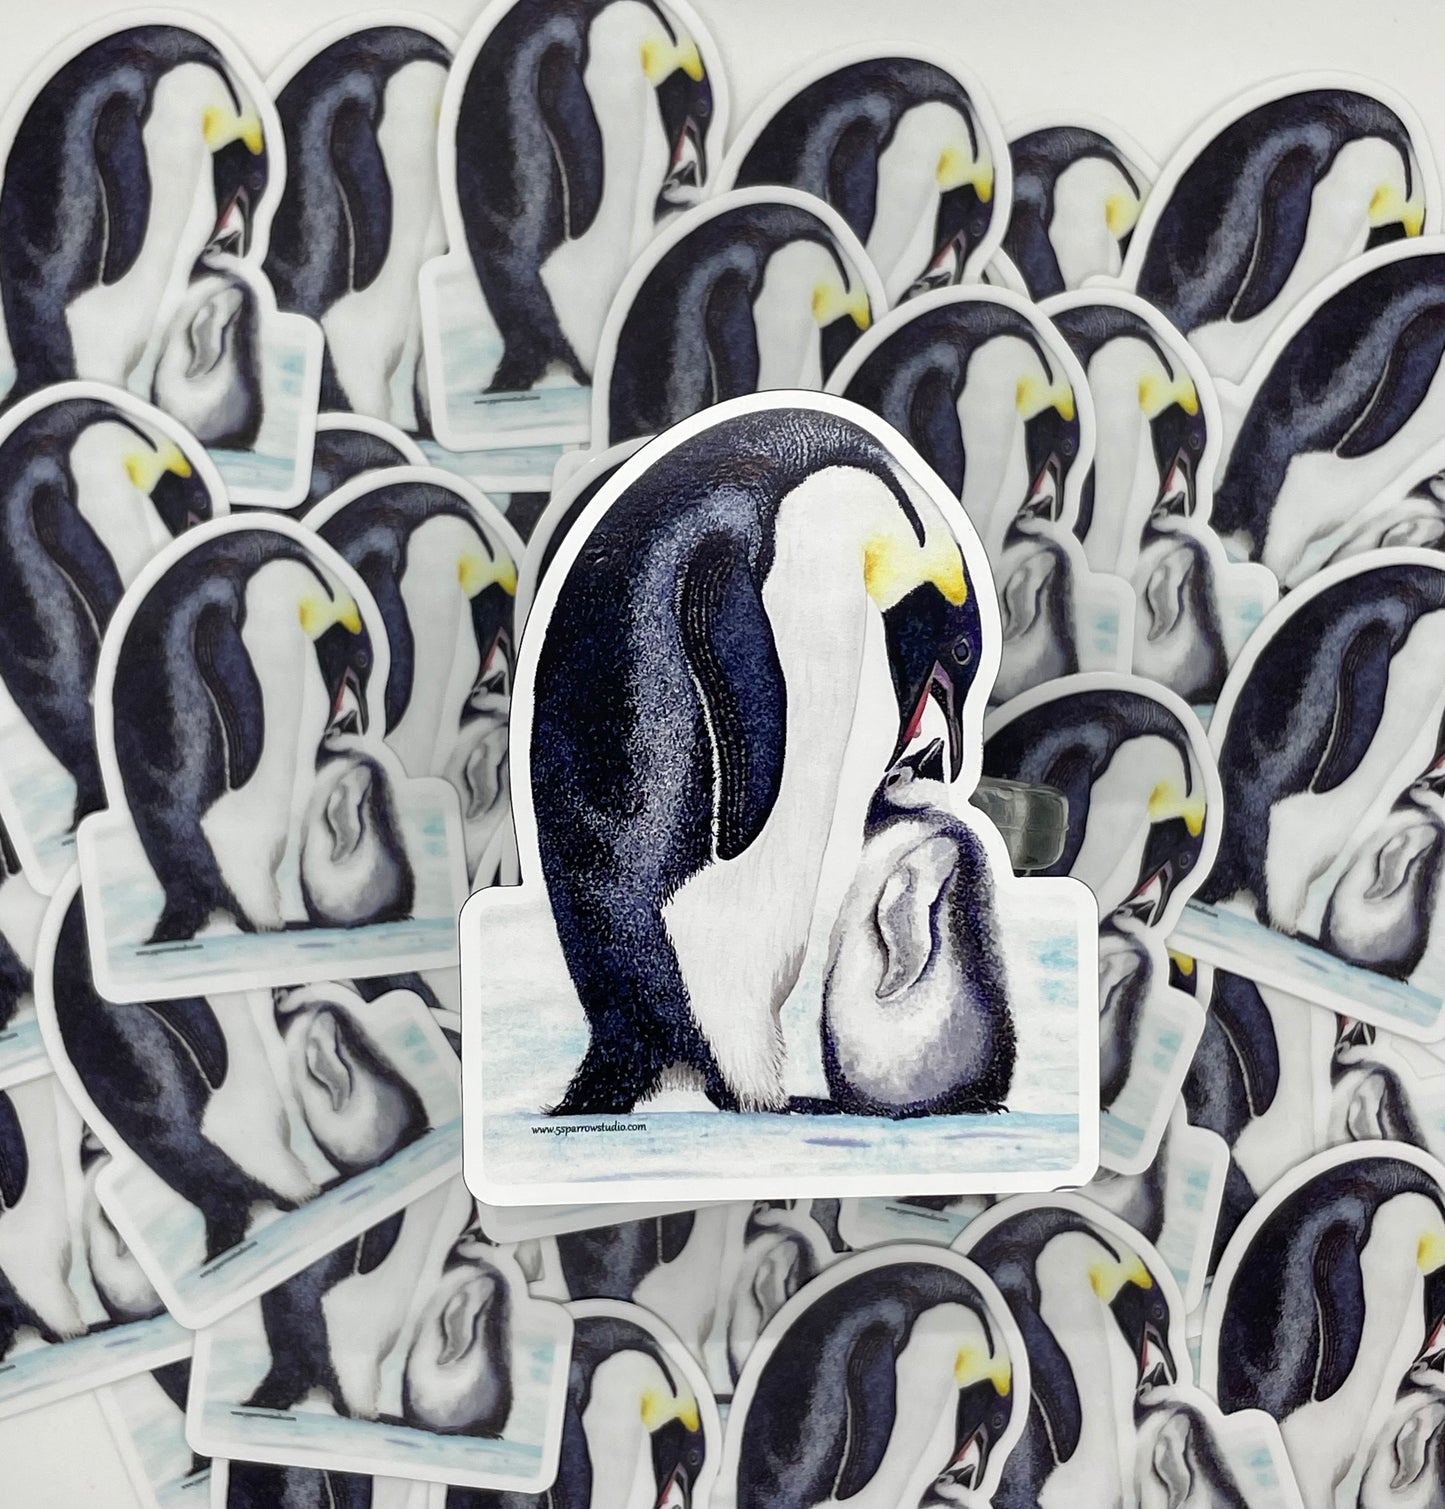 Emperor Penguin